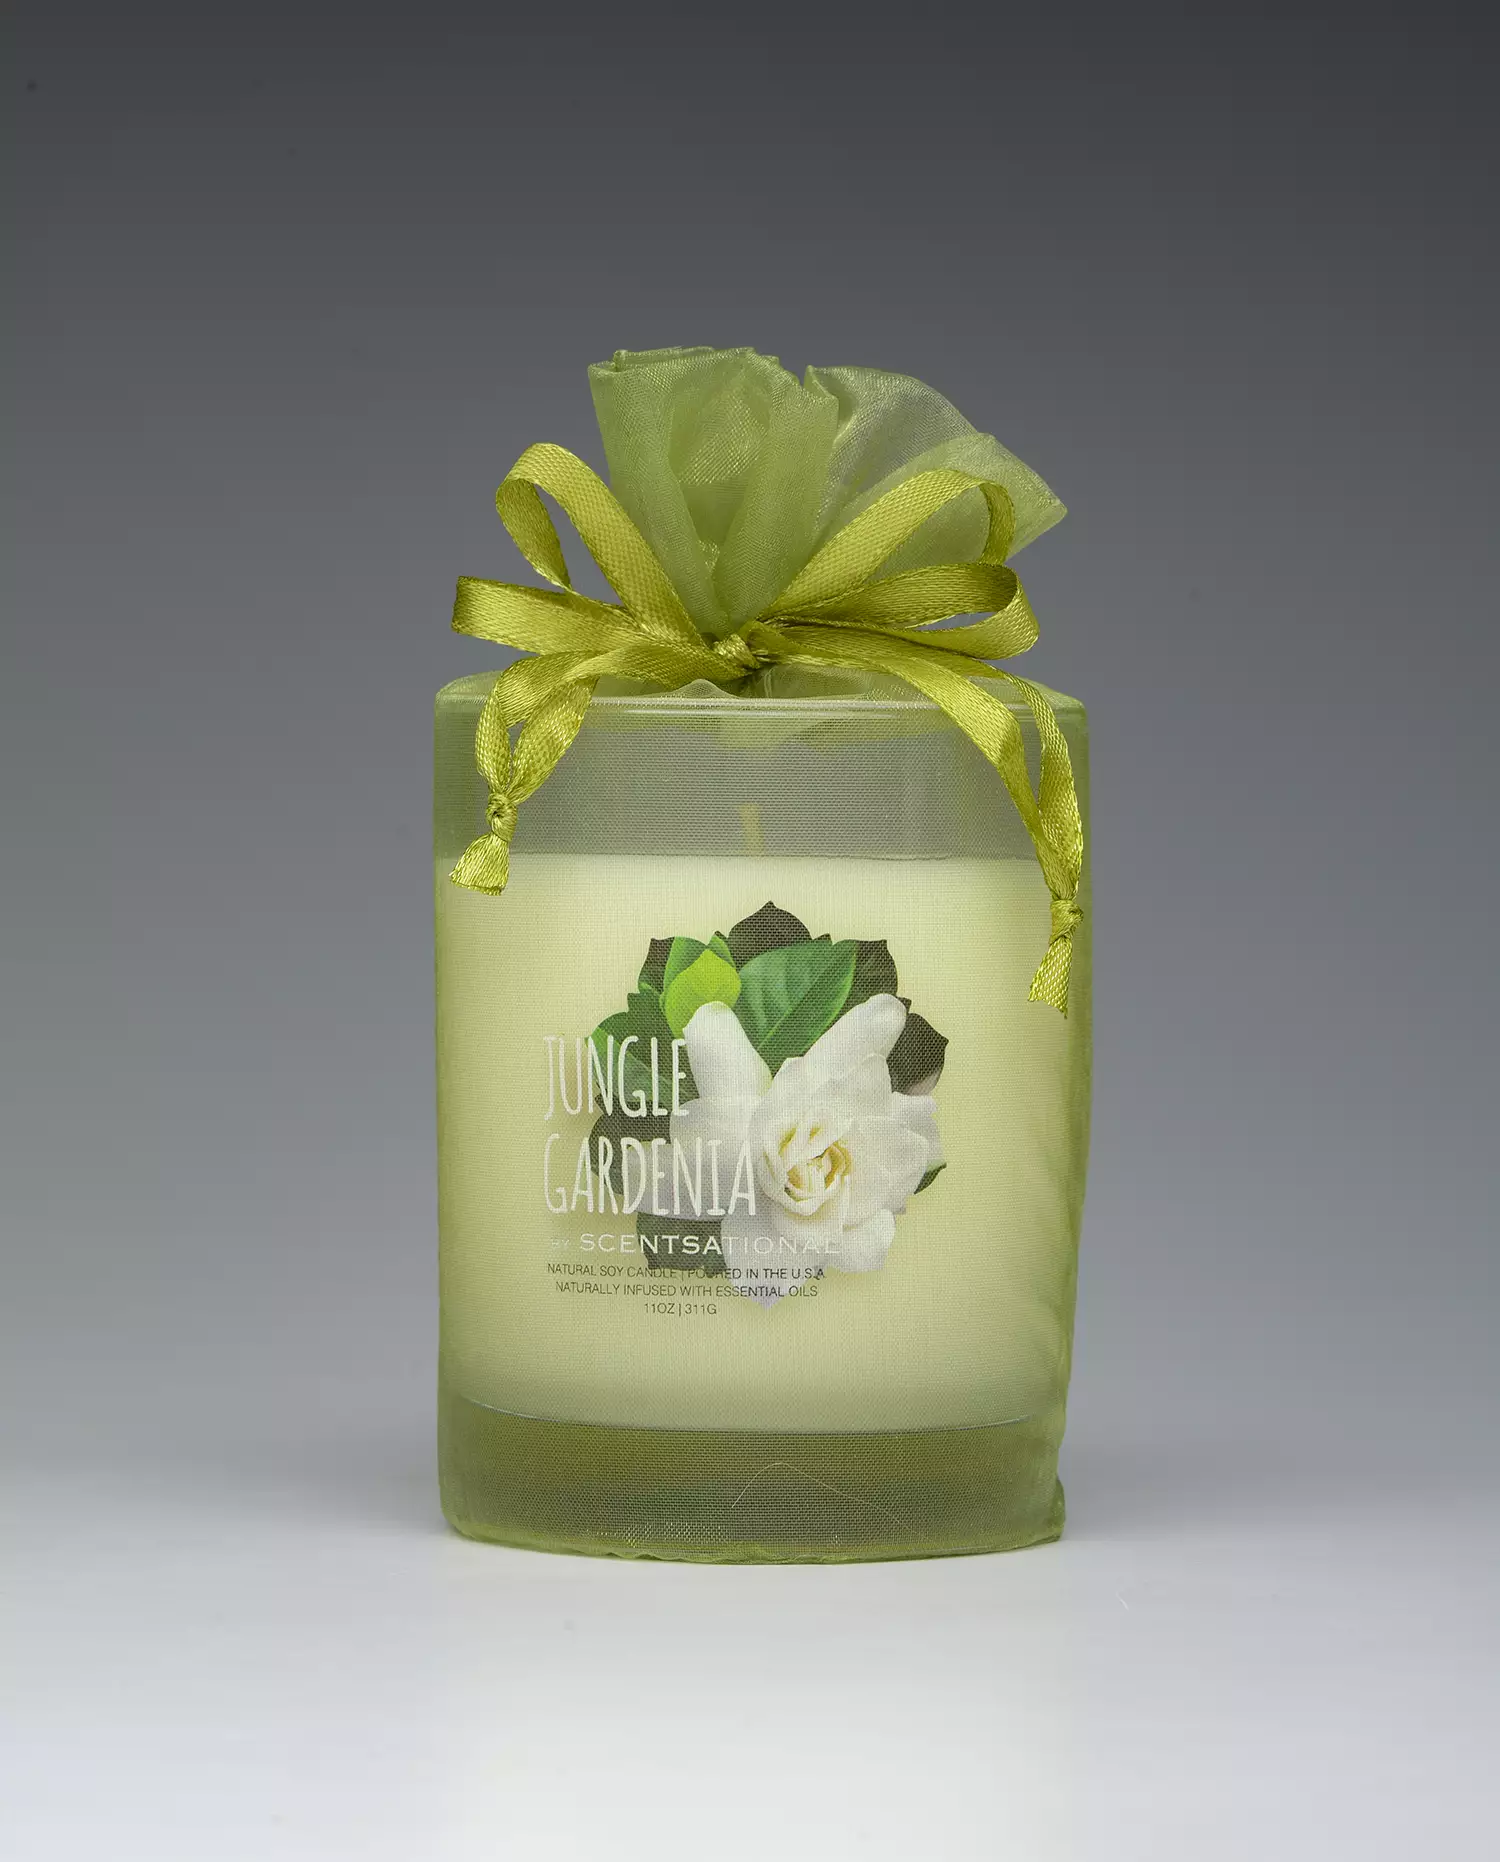 Jungle Gardenia - 11oz scented candle